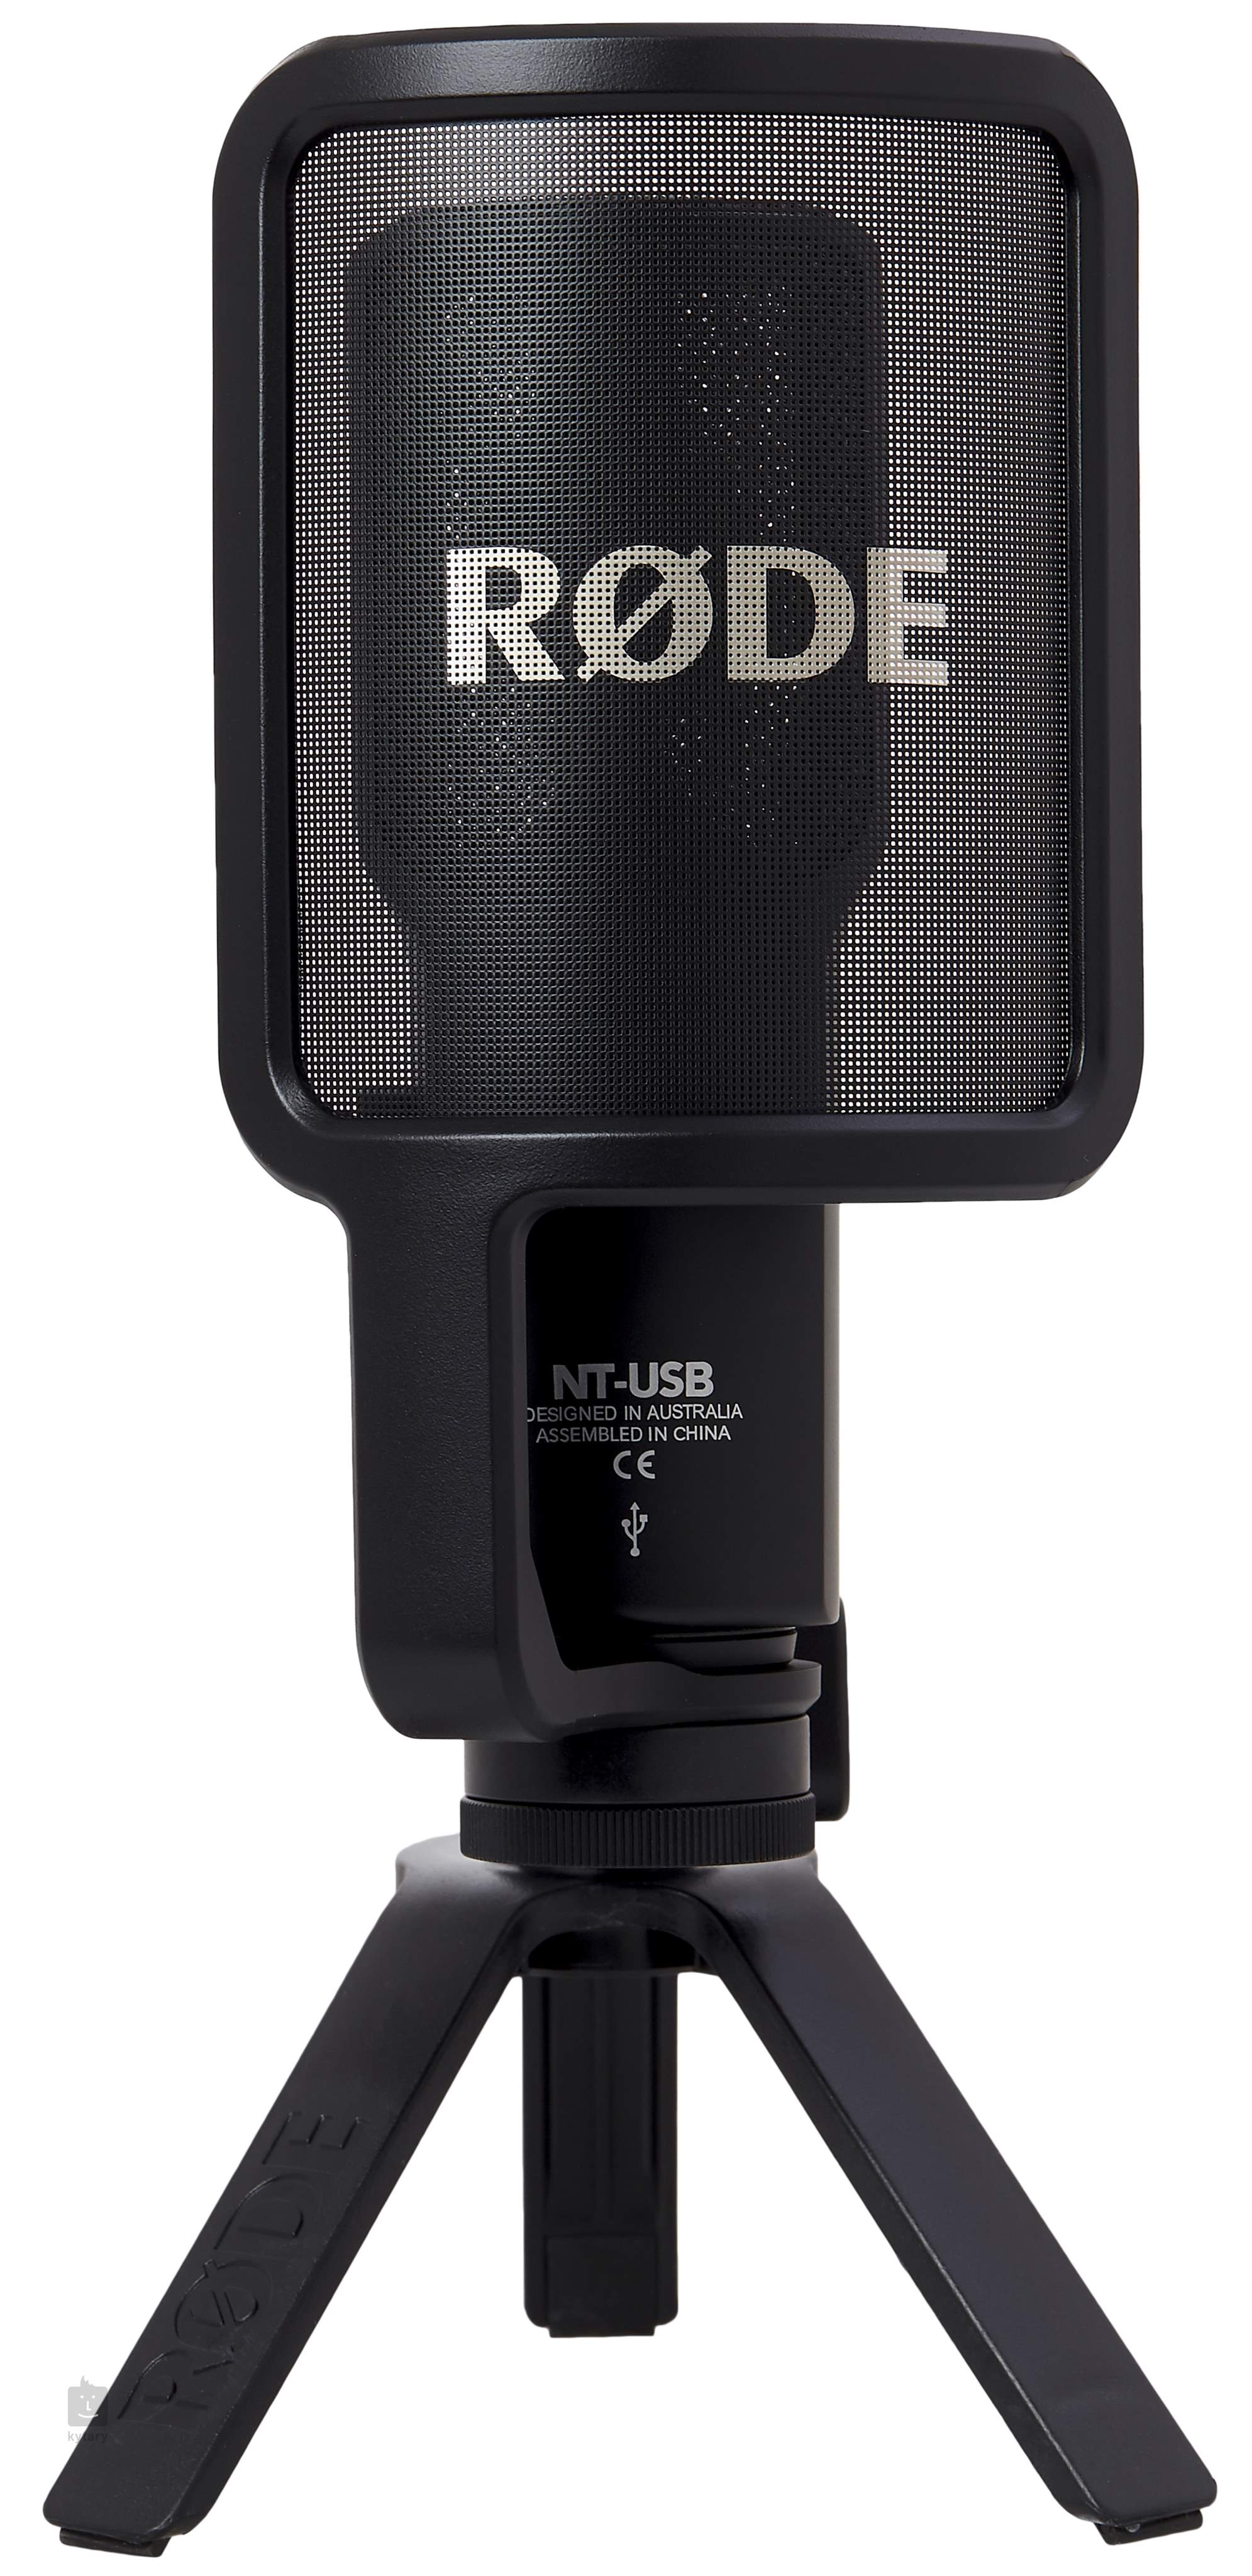 RODE NT-USB USB Microphone